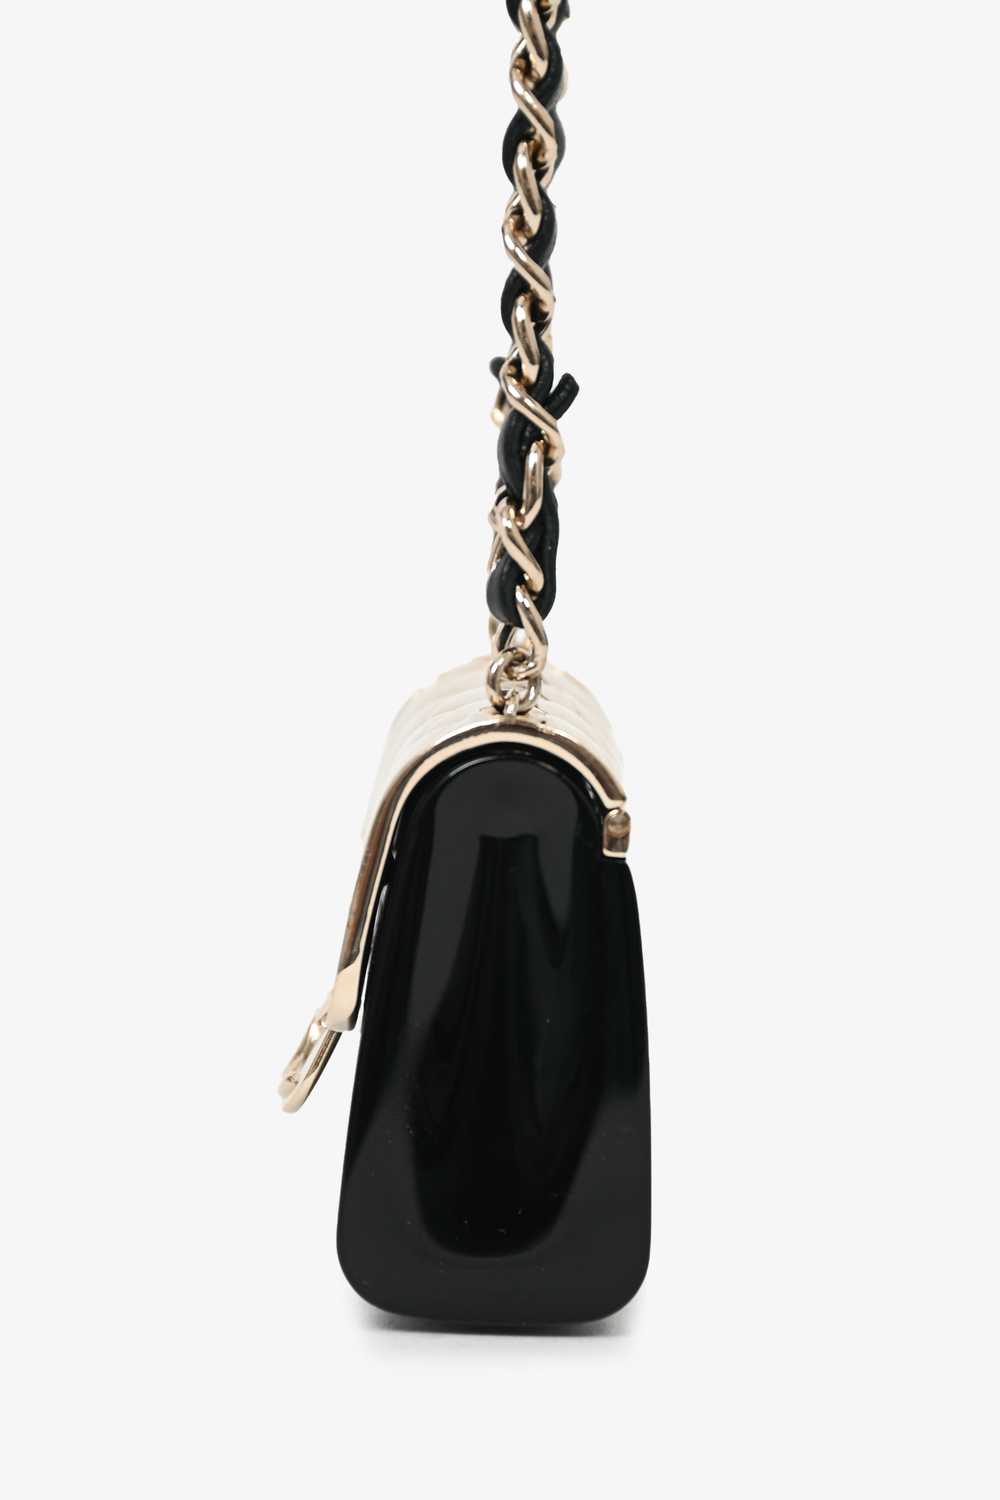 Pre-loved Chanel™ Black/Gold Mini Purse Necklace - image 5